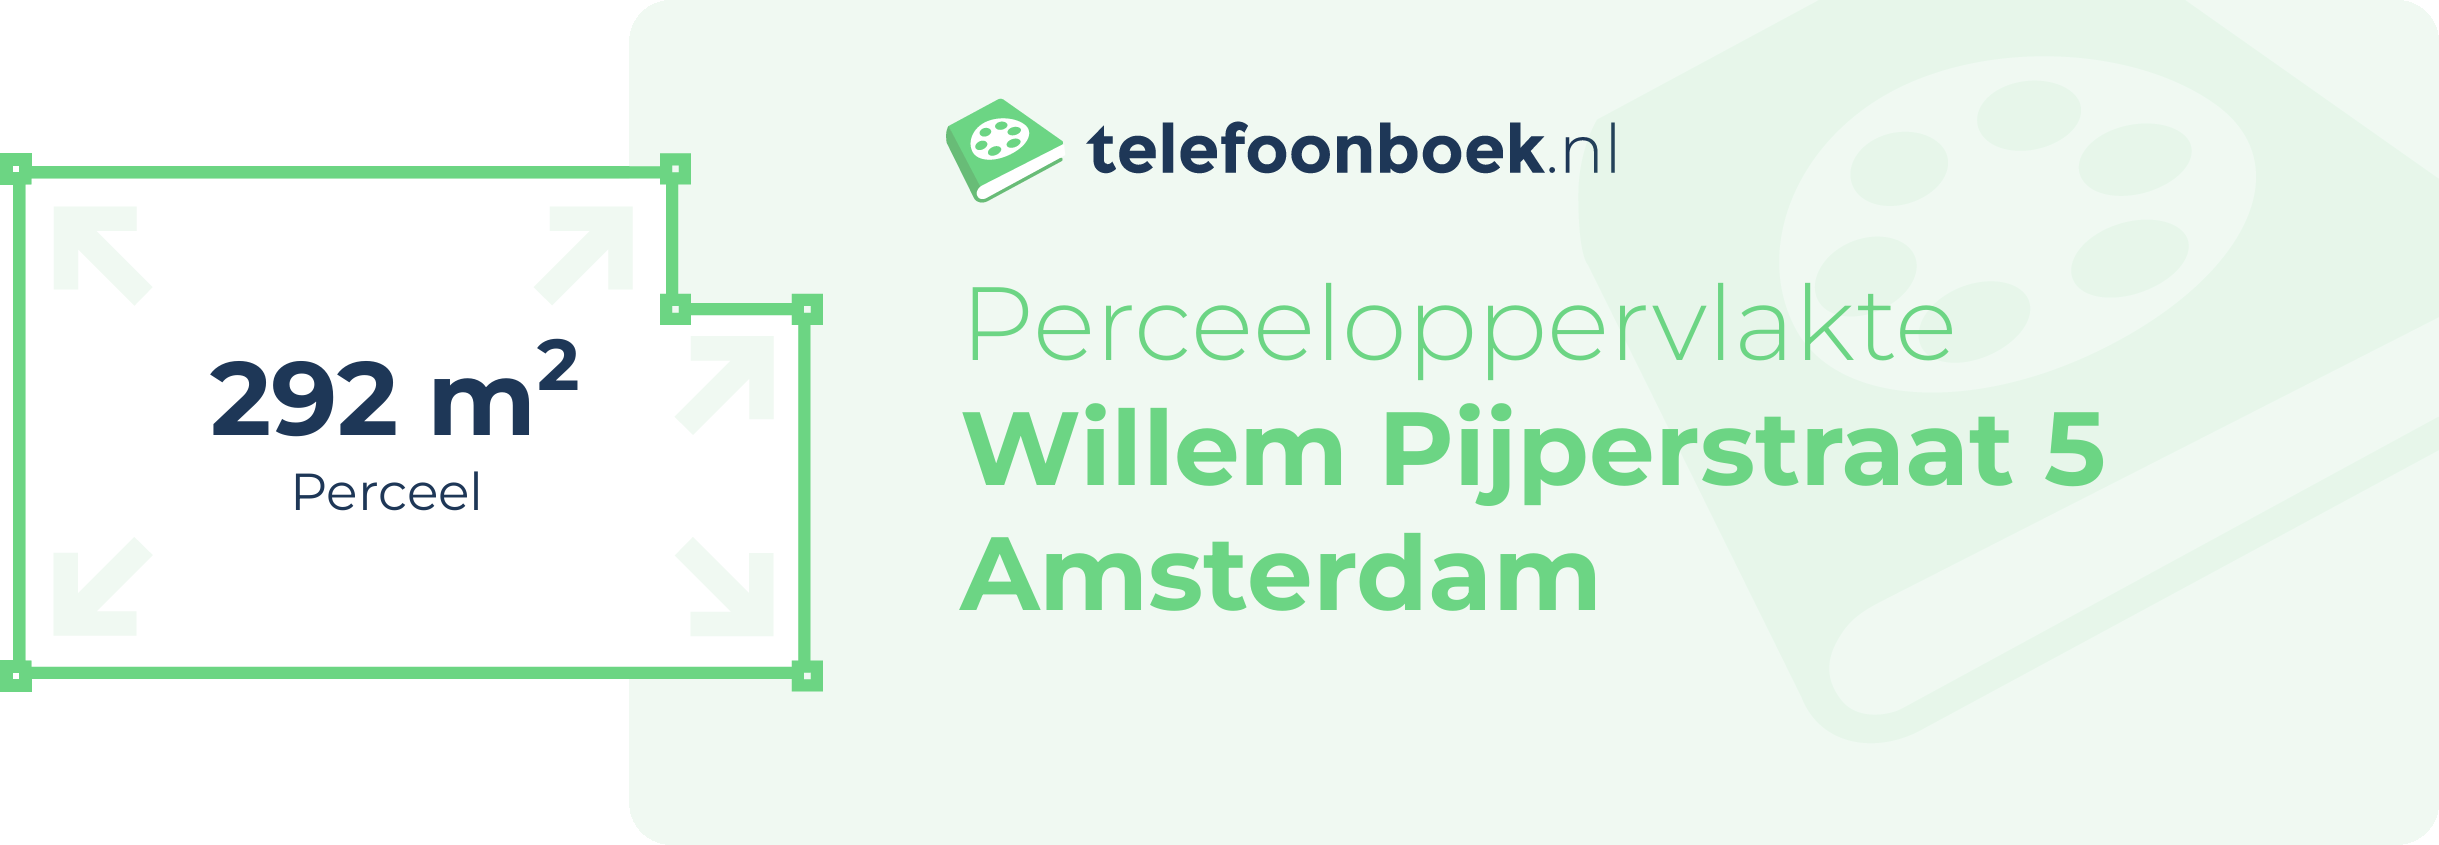 Perceeloppervlakte Willem Pijperstraat 5 Amsterdam